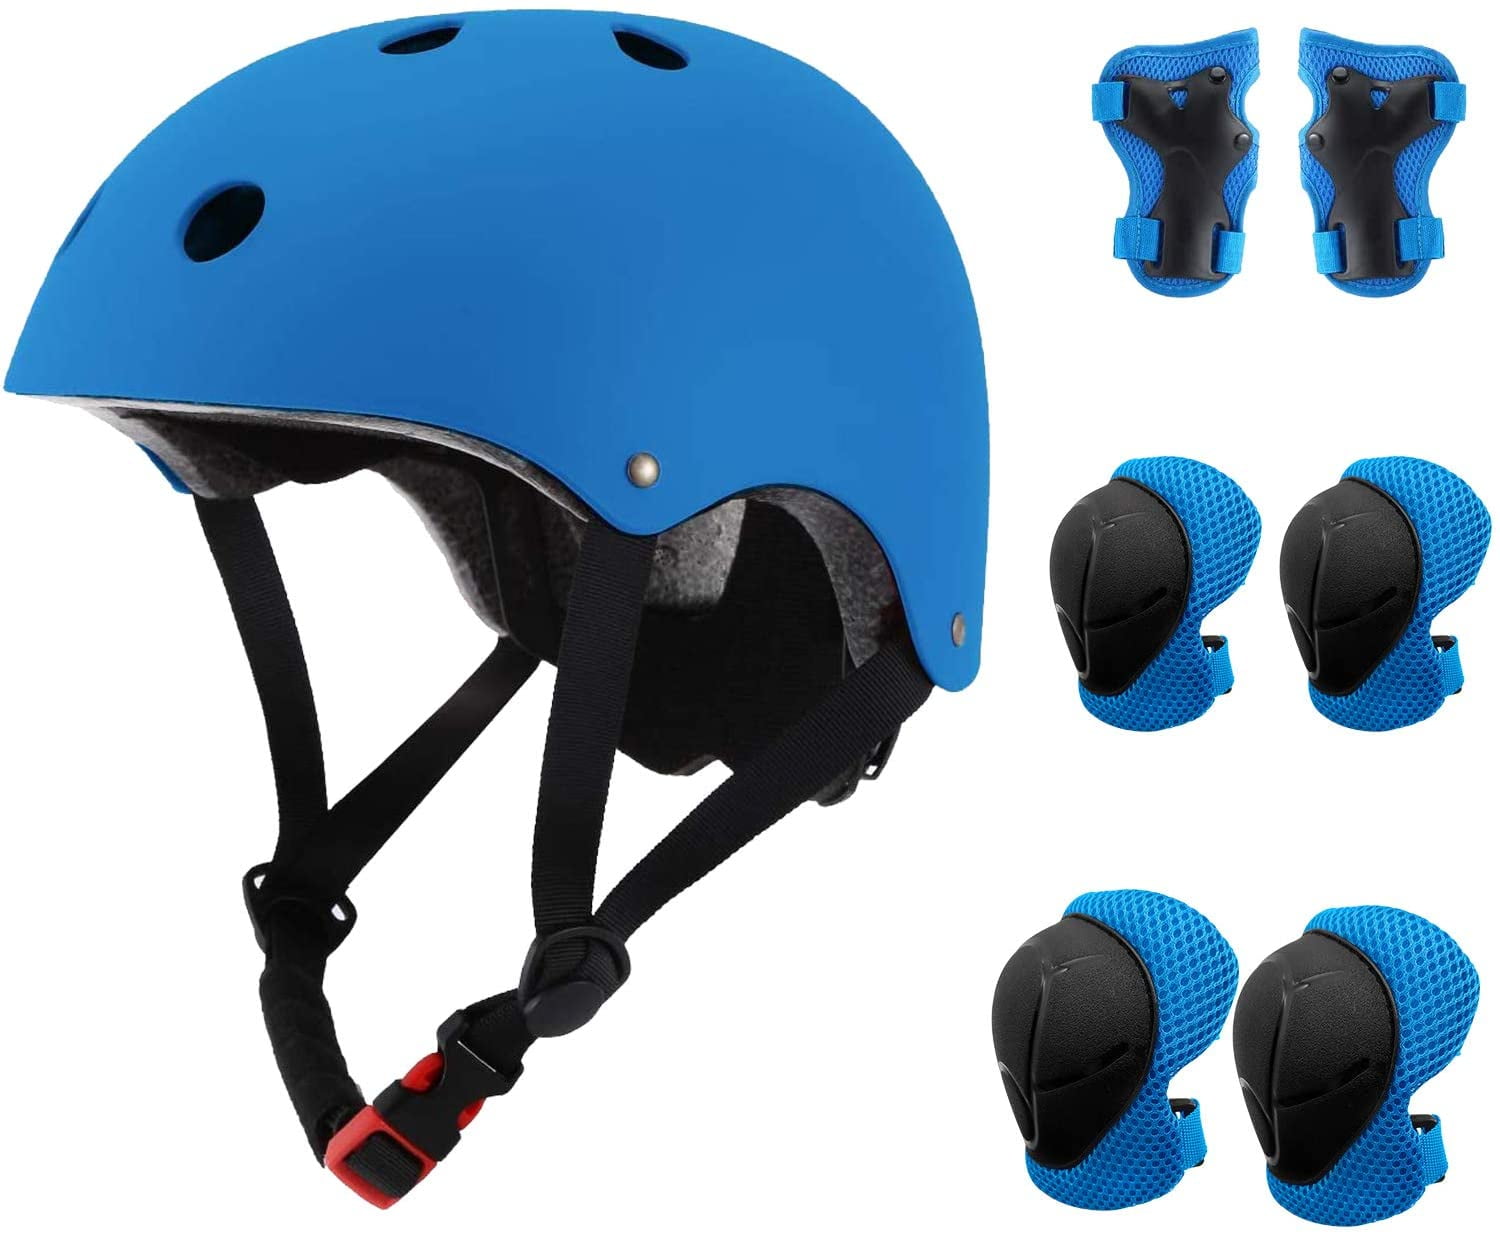 Kids Adjustable Helmet For Bike Cycling Scooter Skateboard Protective Gear HOT 